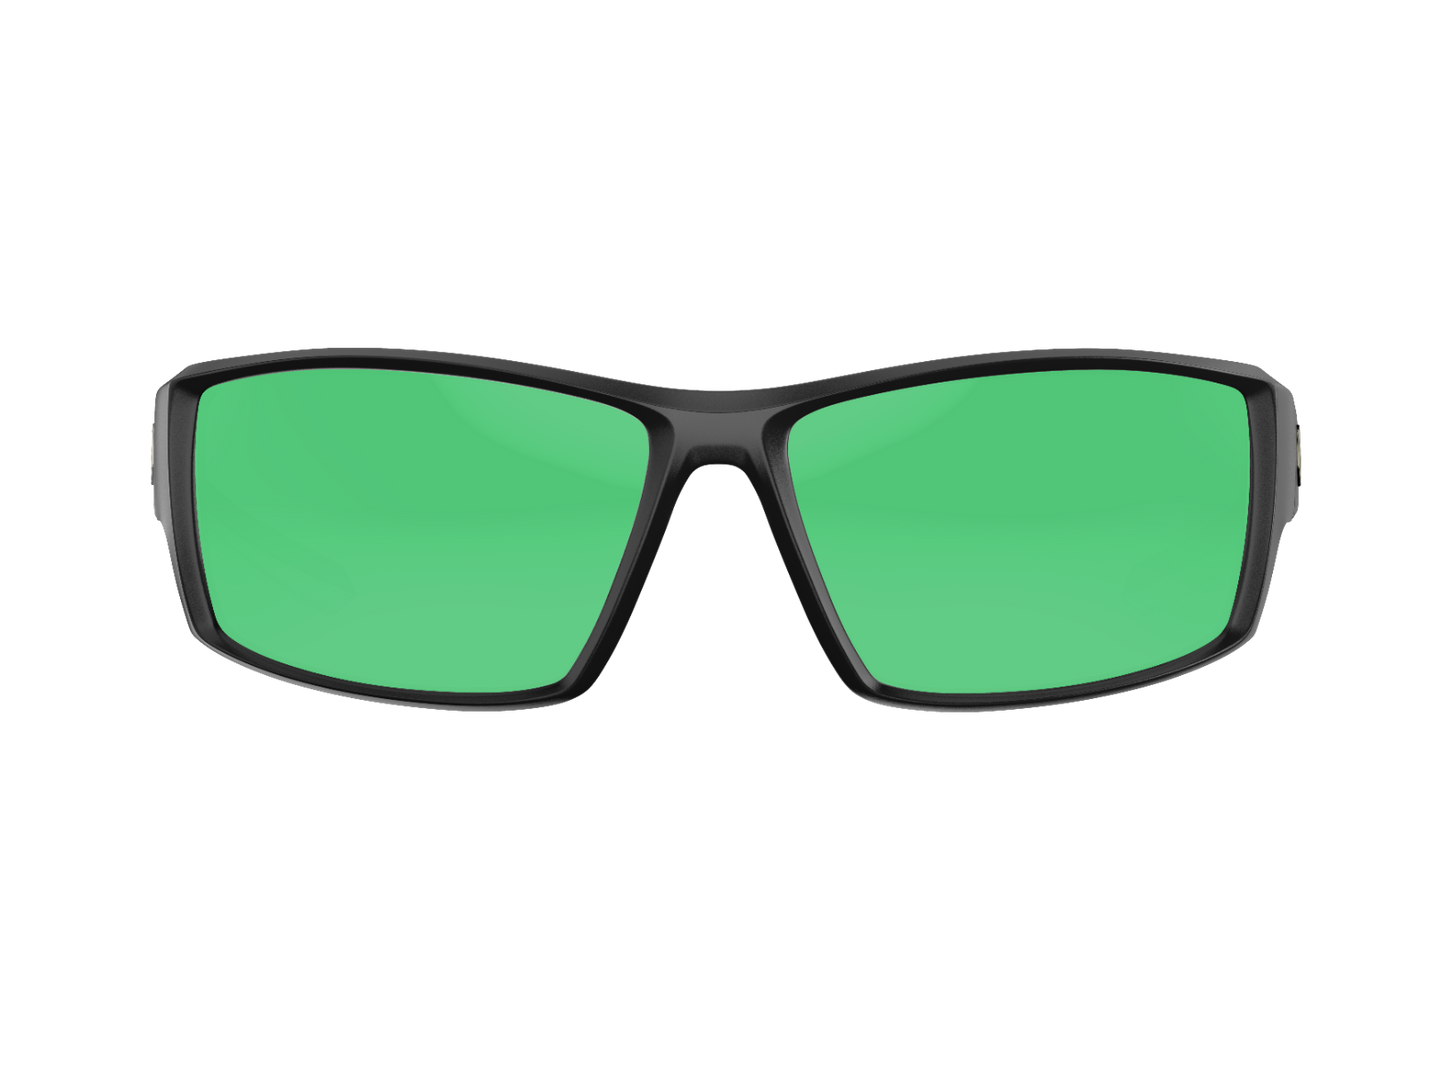 Redtail Republic Baffin Sunglasses Matte Black/Green Mirror